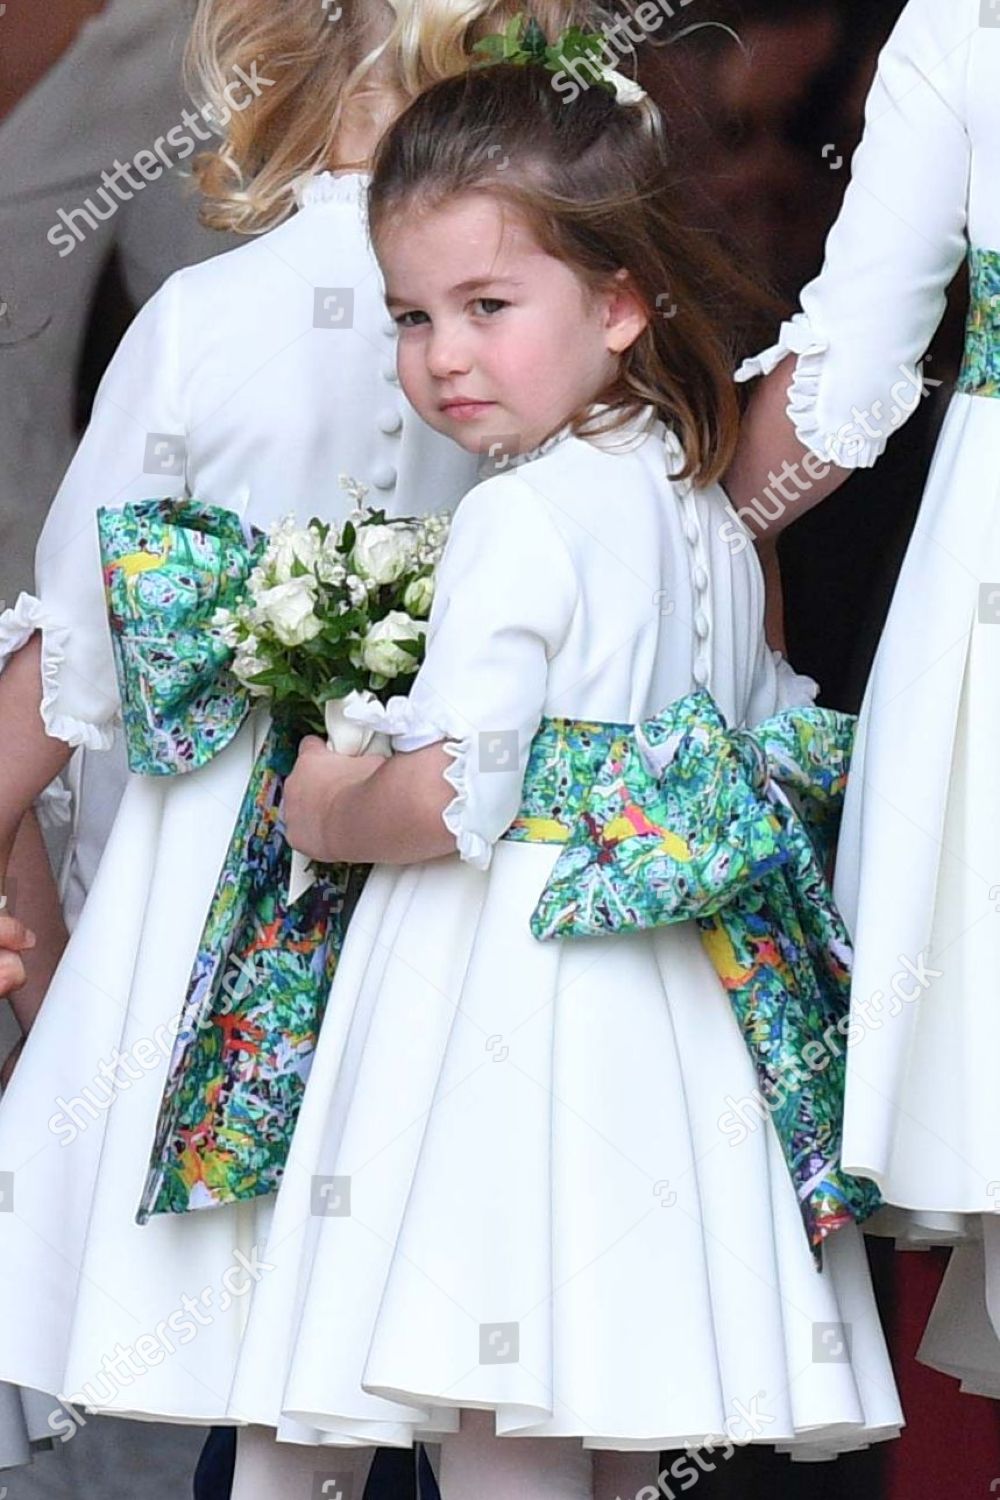 the-wedding-of-princess-eugenie-and-jack-brooksbank-pre-ceremony-windsor-berkshire-uk-shutterstock-editorial-9927730ak.jpg